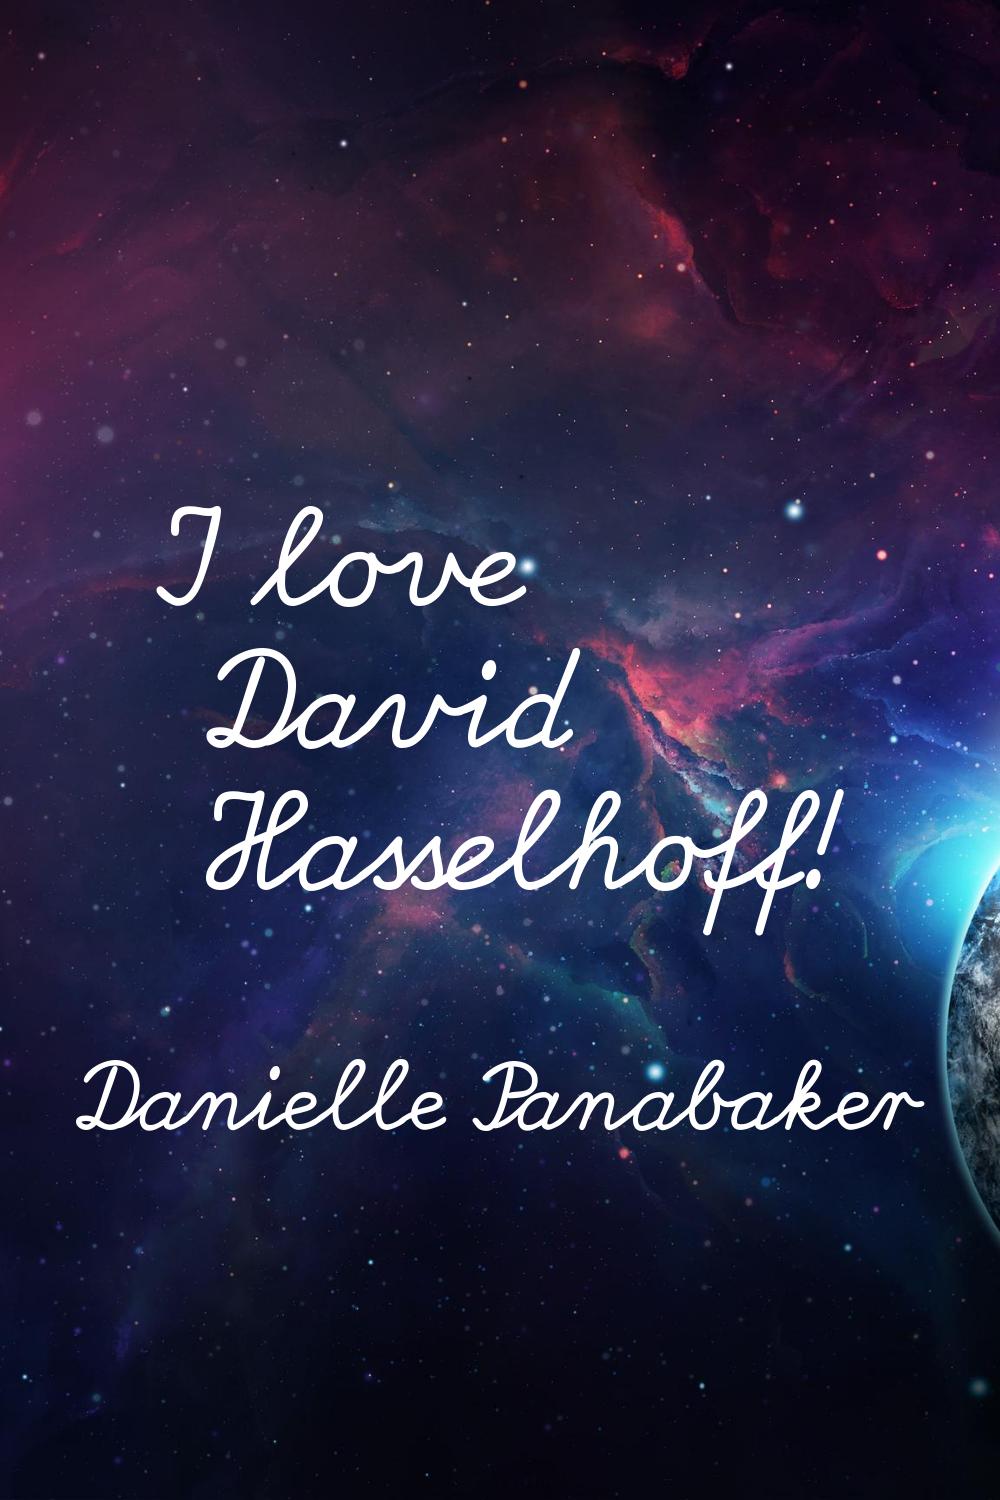 I love David Hasselhoff!